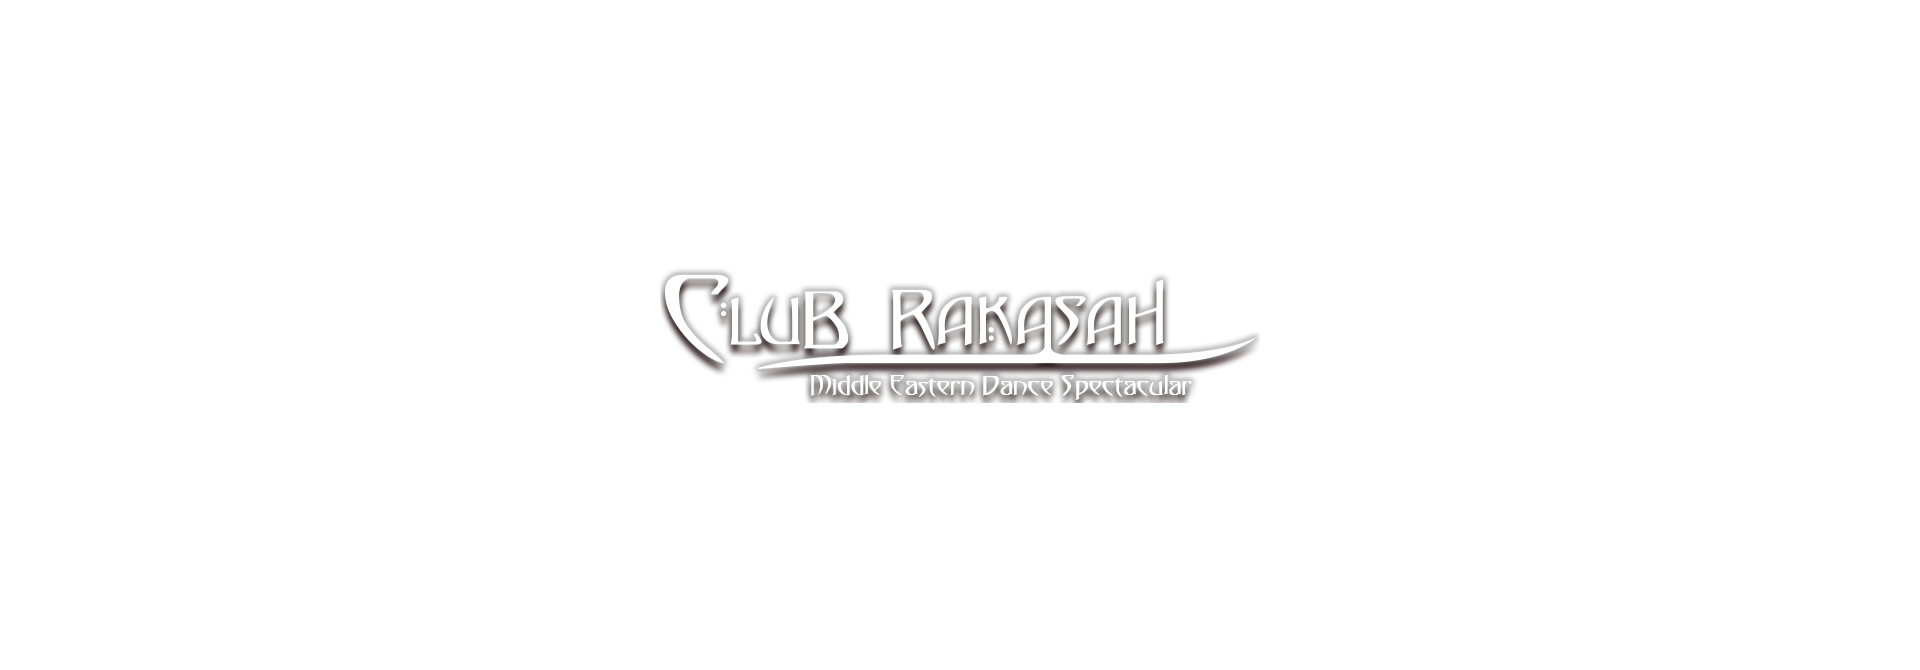 club rakasah dance spectacular